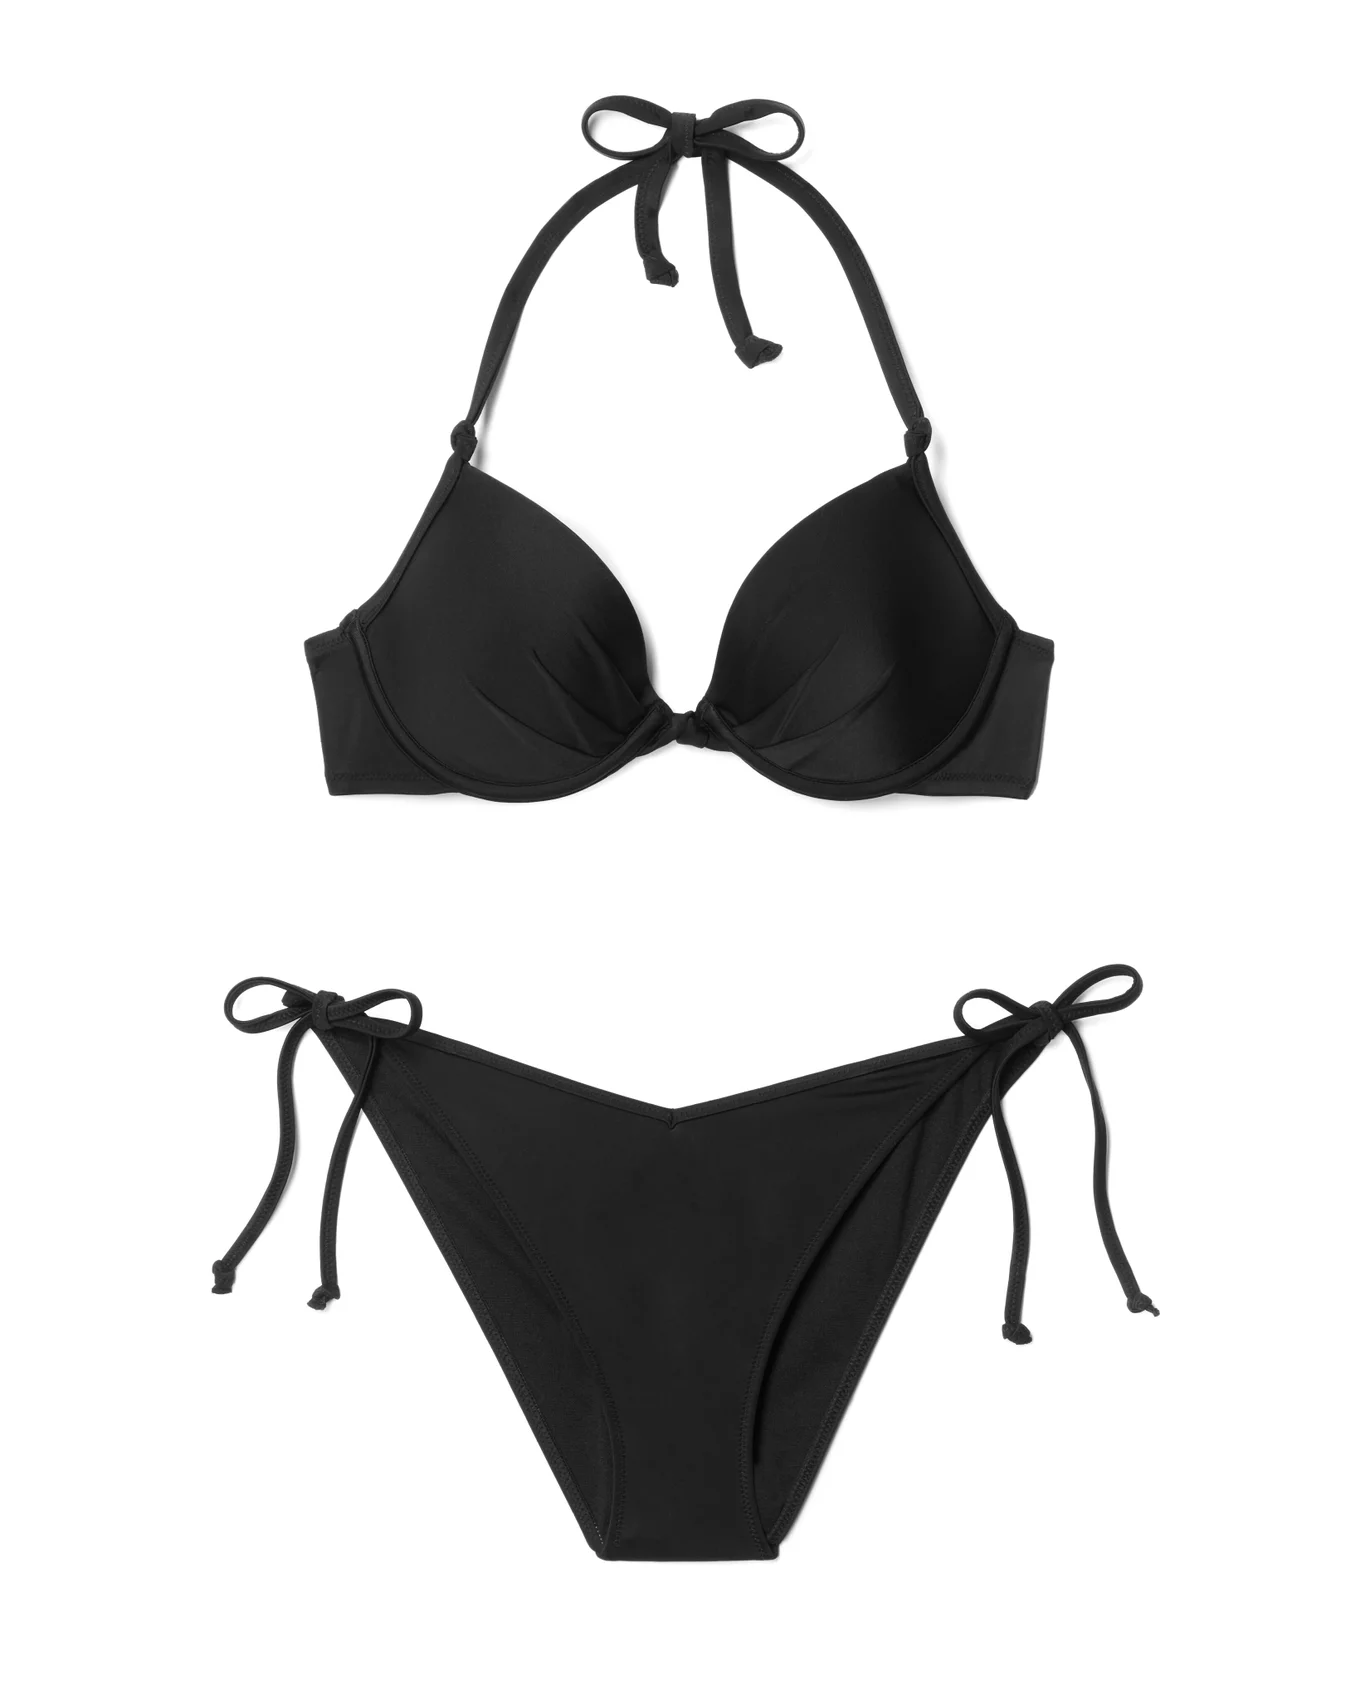 Adore Me Women's Shelby Swimwear Top 38g / Sugar Rush C02 Black. : Target